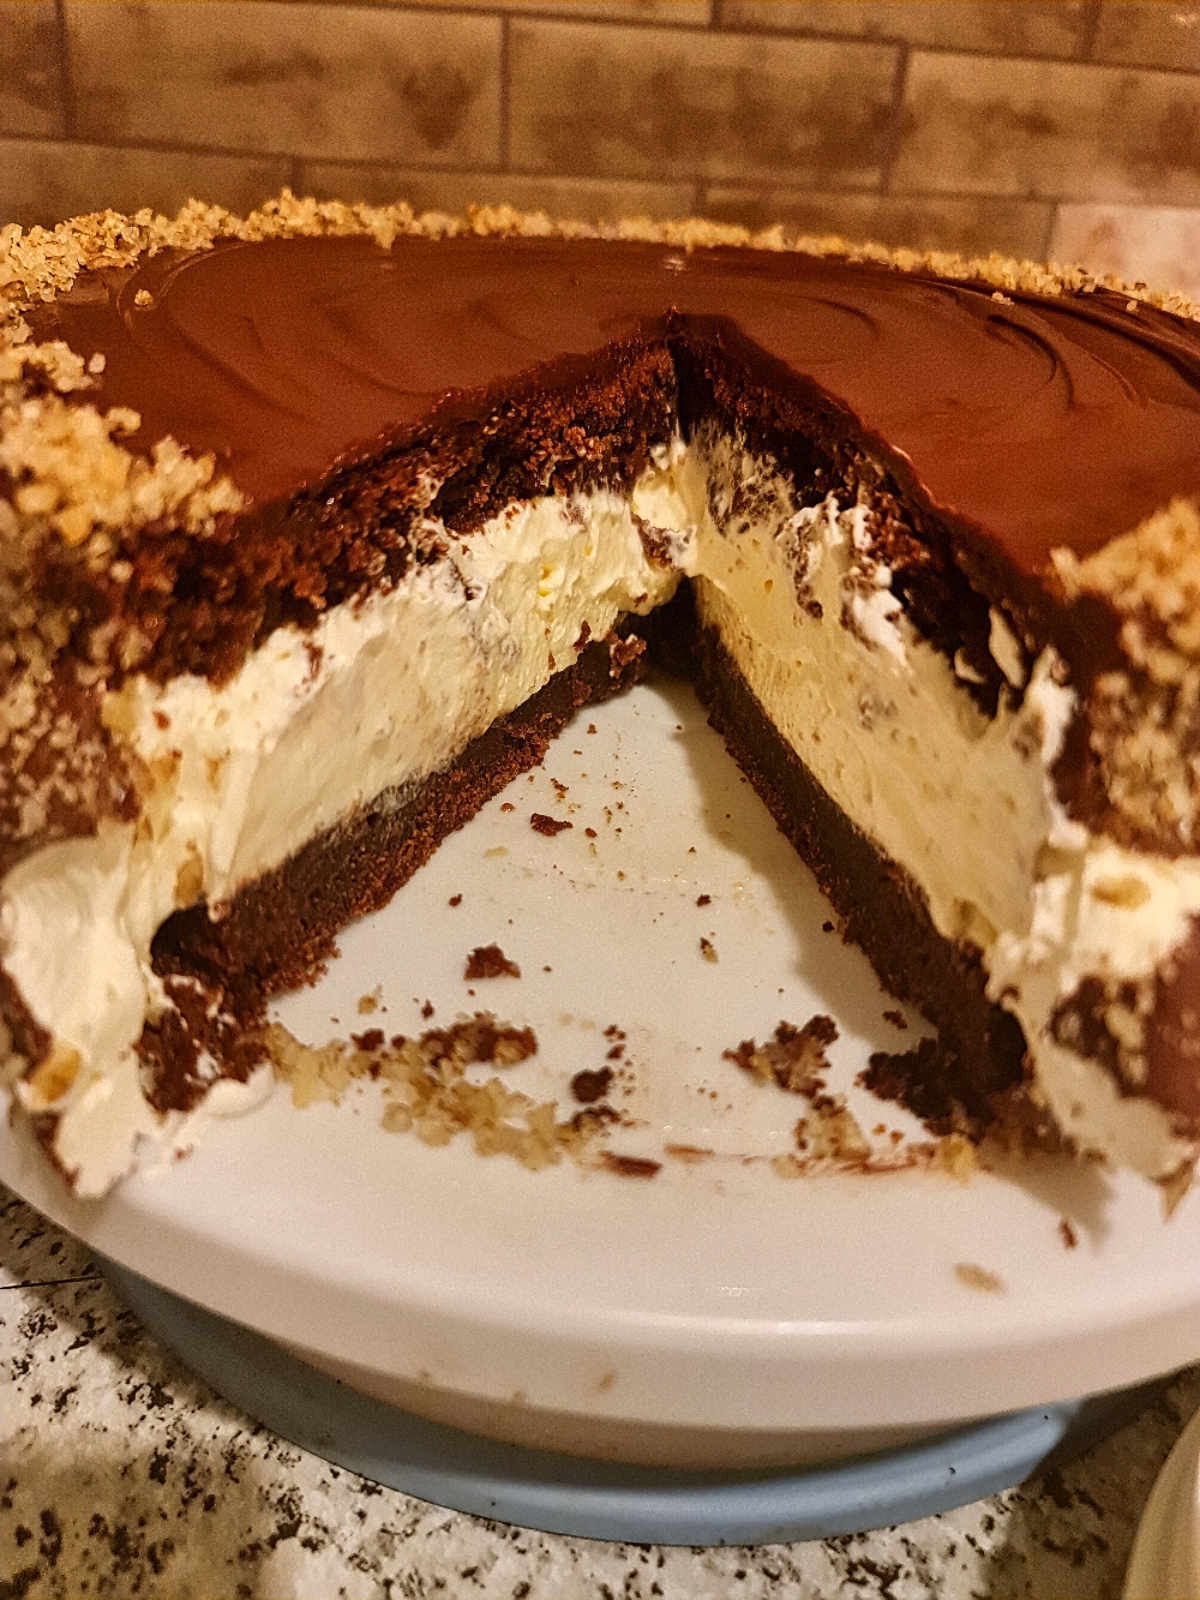 Tort negresa ( Brownie cake )